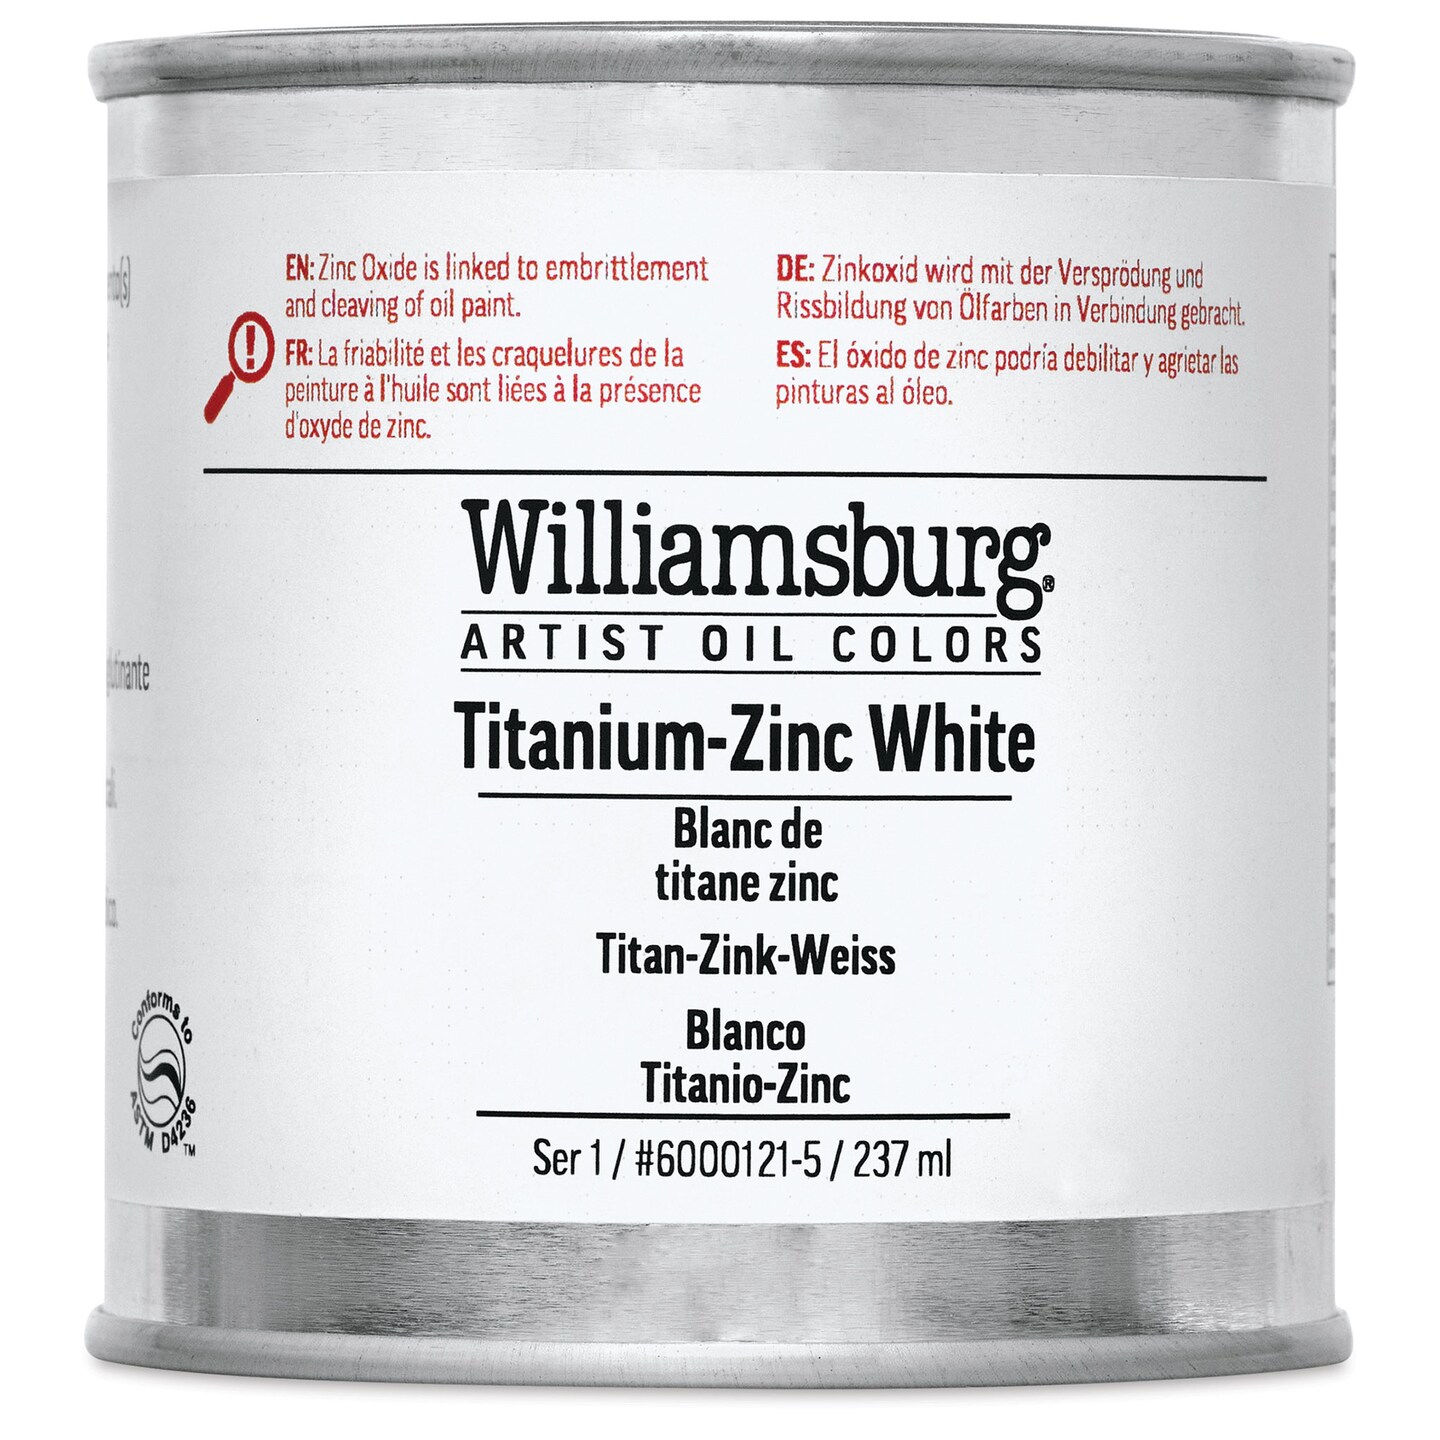 Williamsburg Handmade Oil Paint - Titanium-Zinc White, 8 oz can